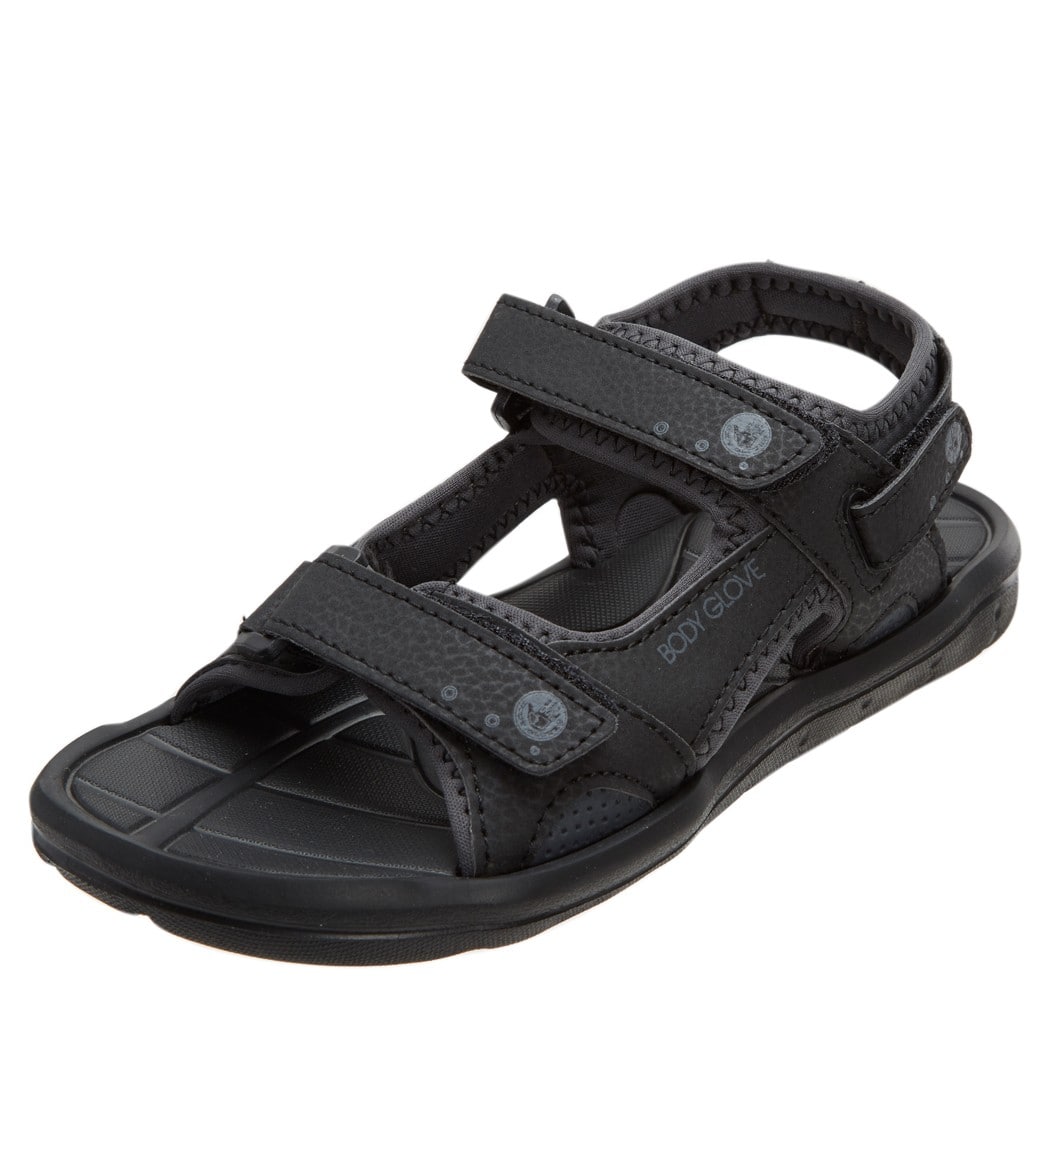 Body Glove Boys' Trek Sandals - Black/Black 1 - Swimoutlet.com